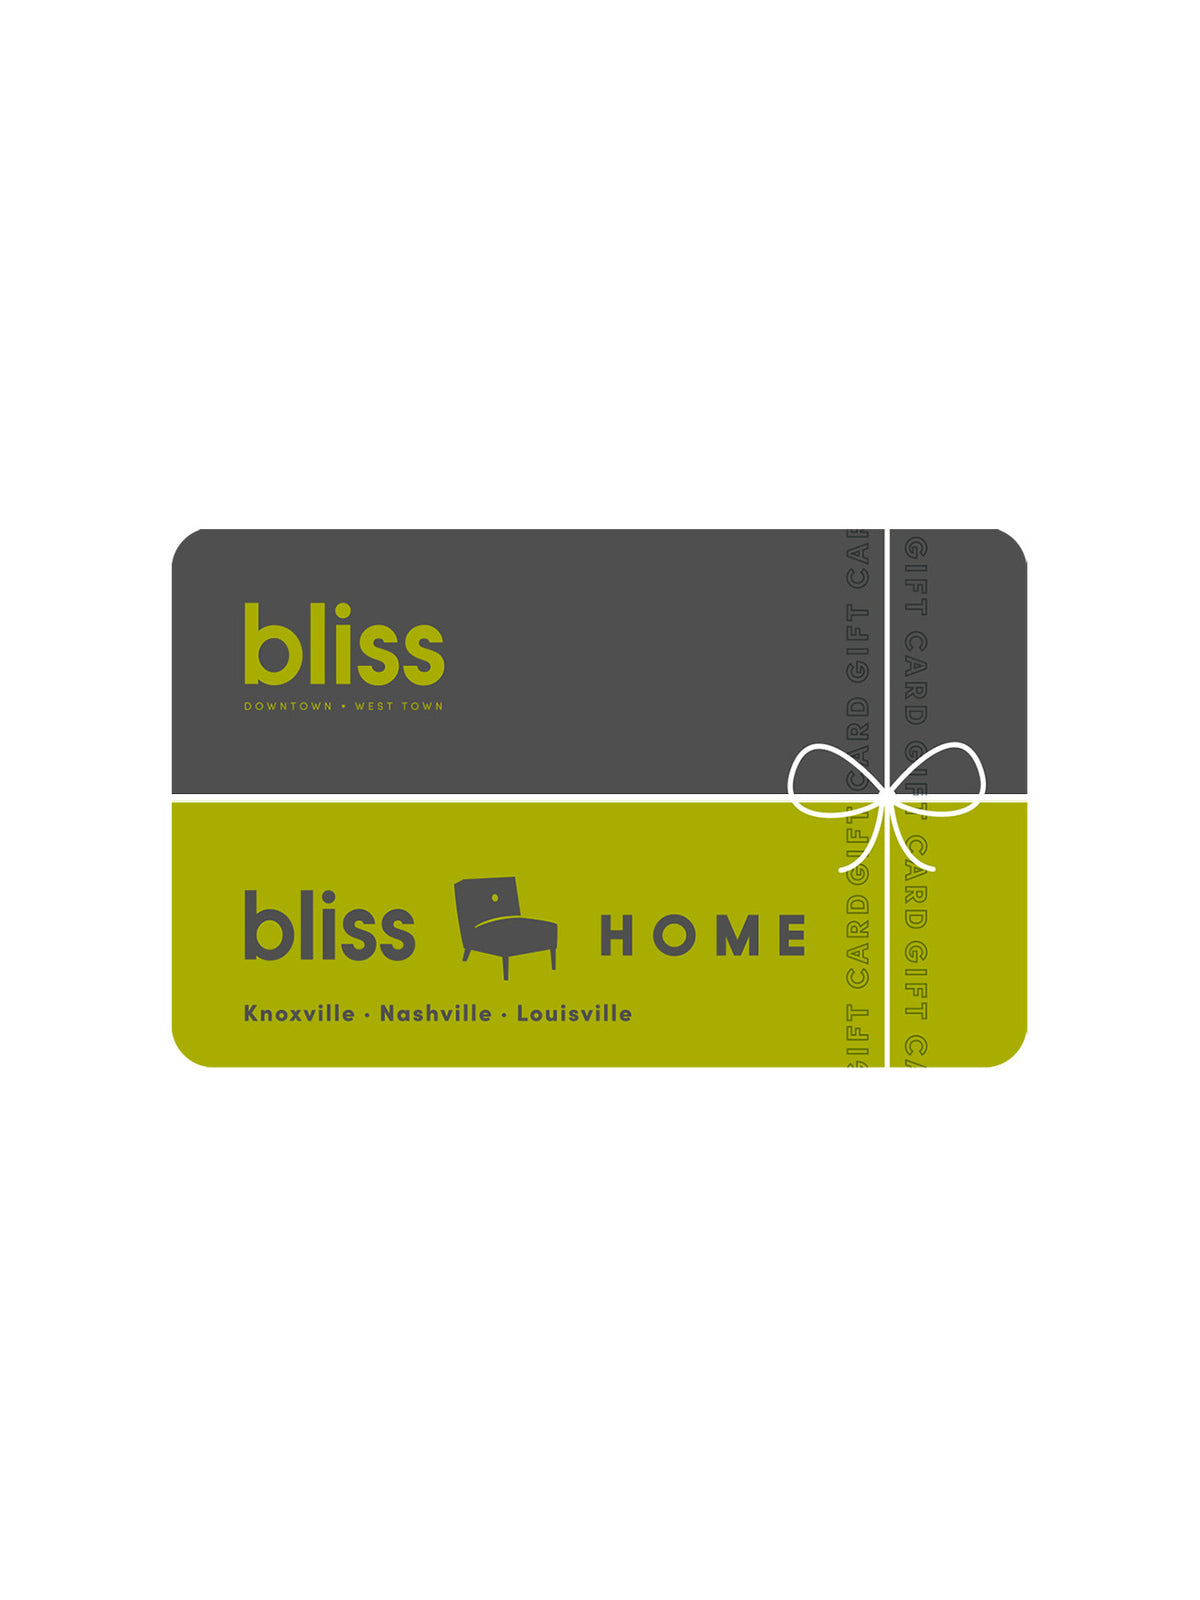 bliss $500 gift card